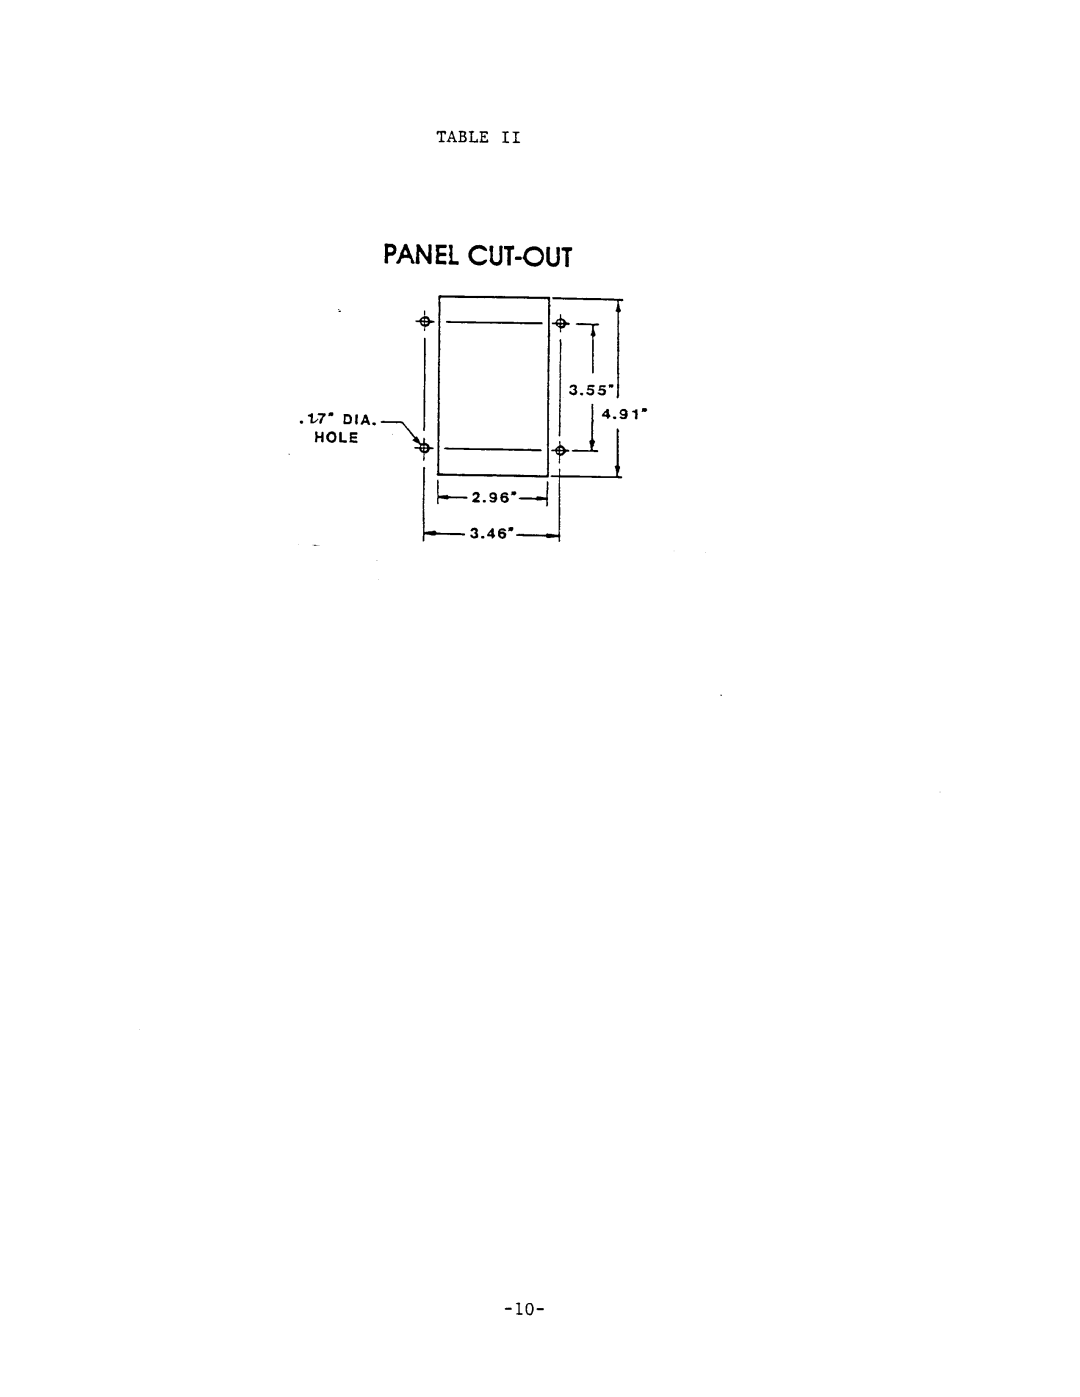 Omega Engineering PHTX-11 manual Pan El Cut-Out, ’7.t DIA HOLE 